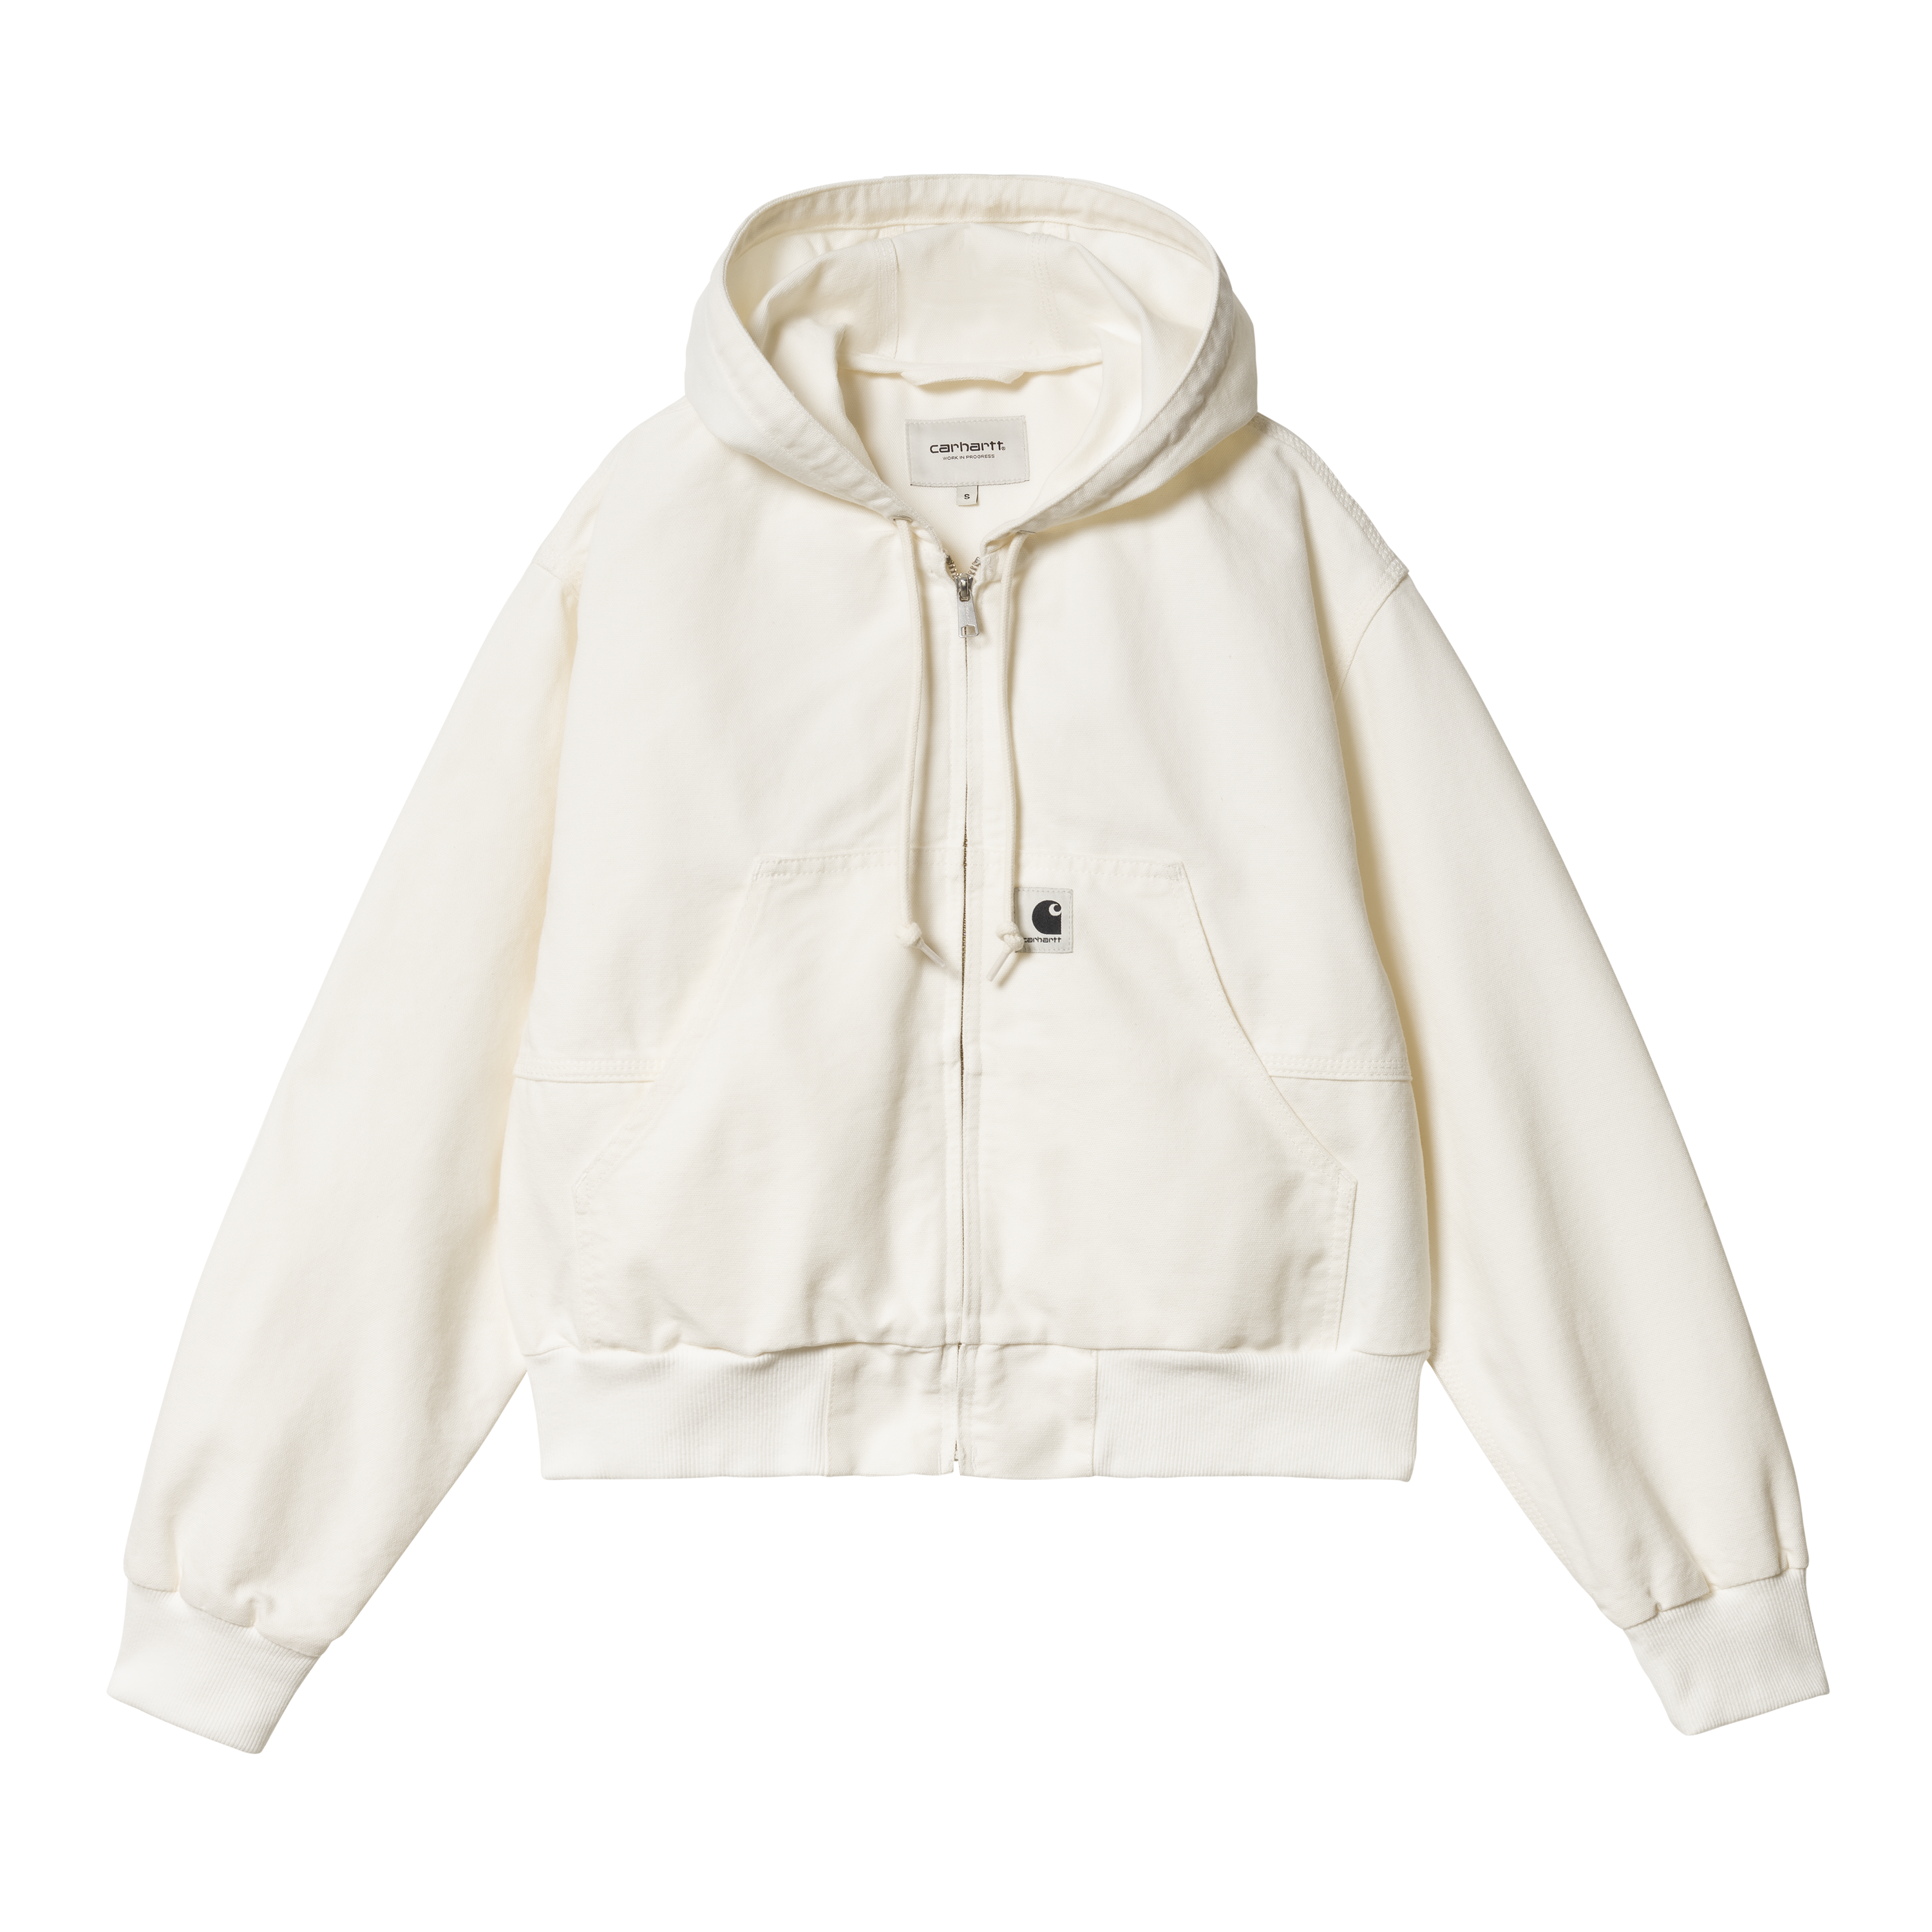 Carhartt WIP Women’s Amherst Jacket in White